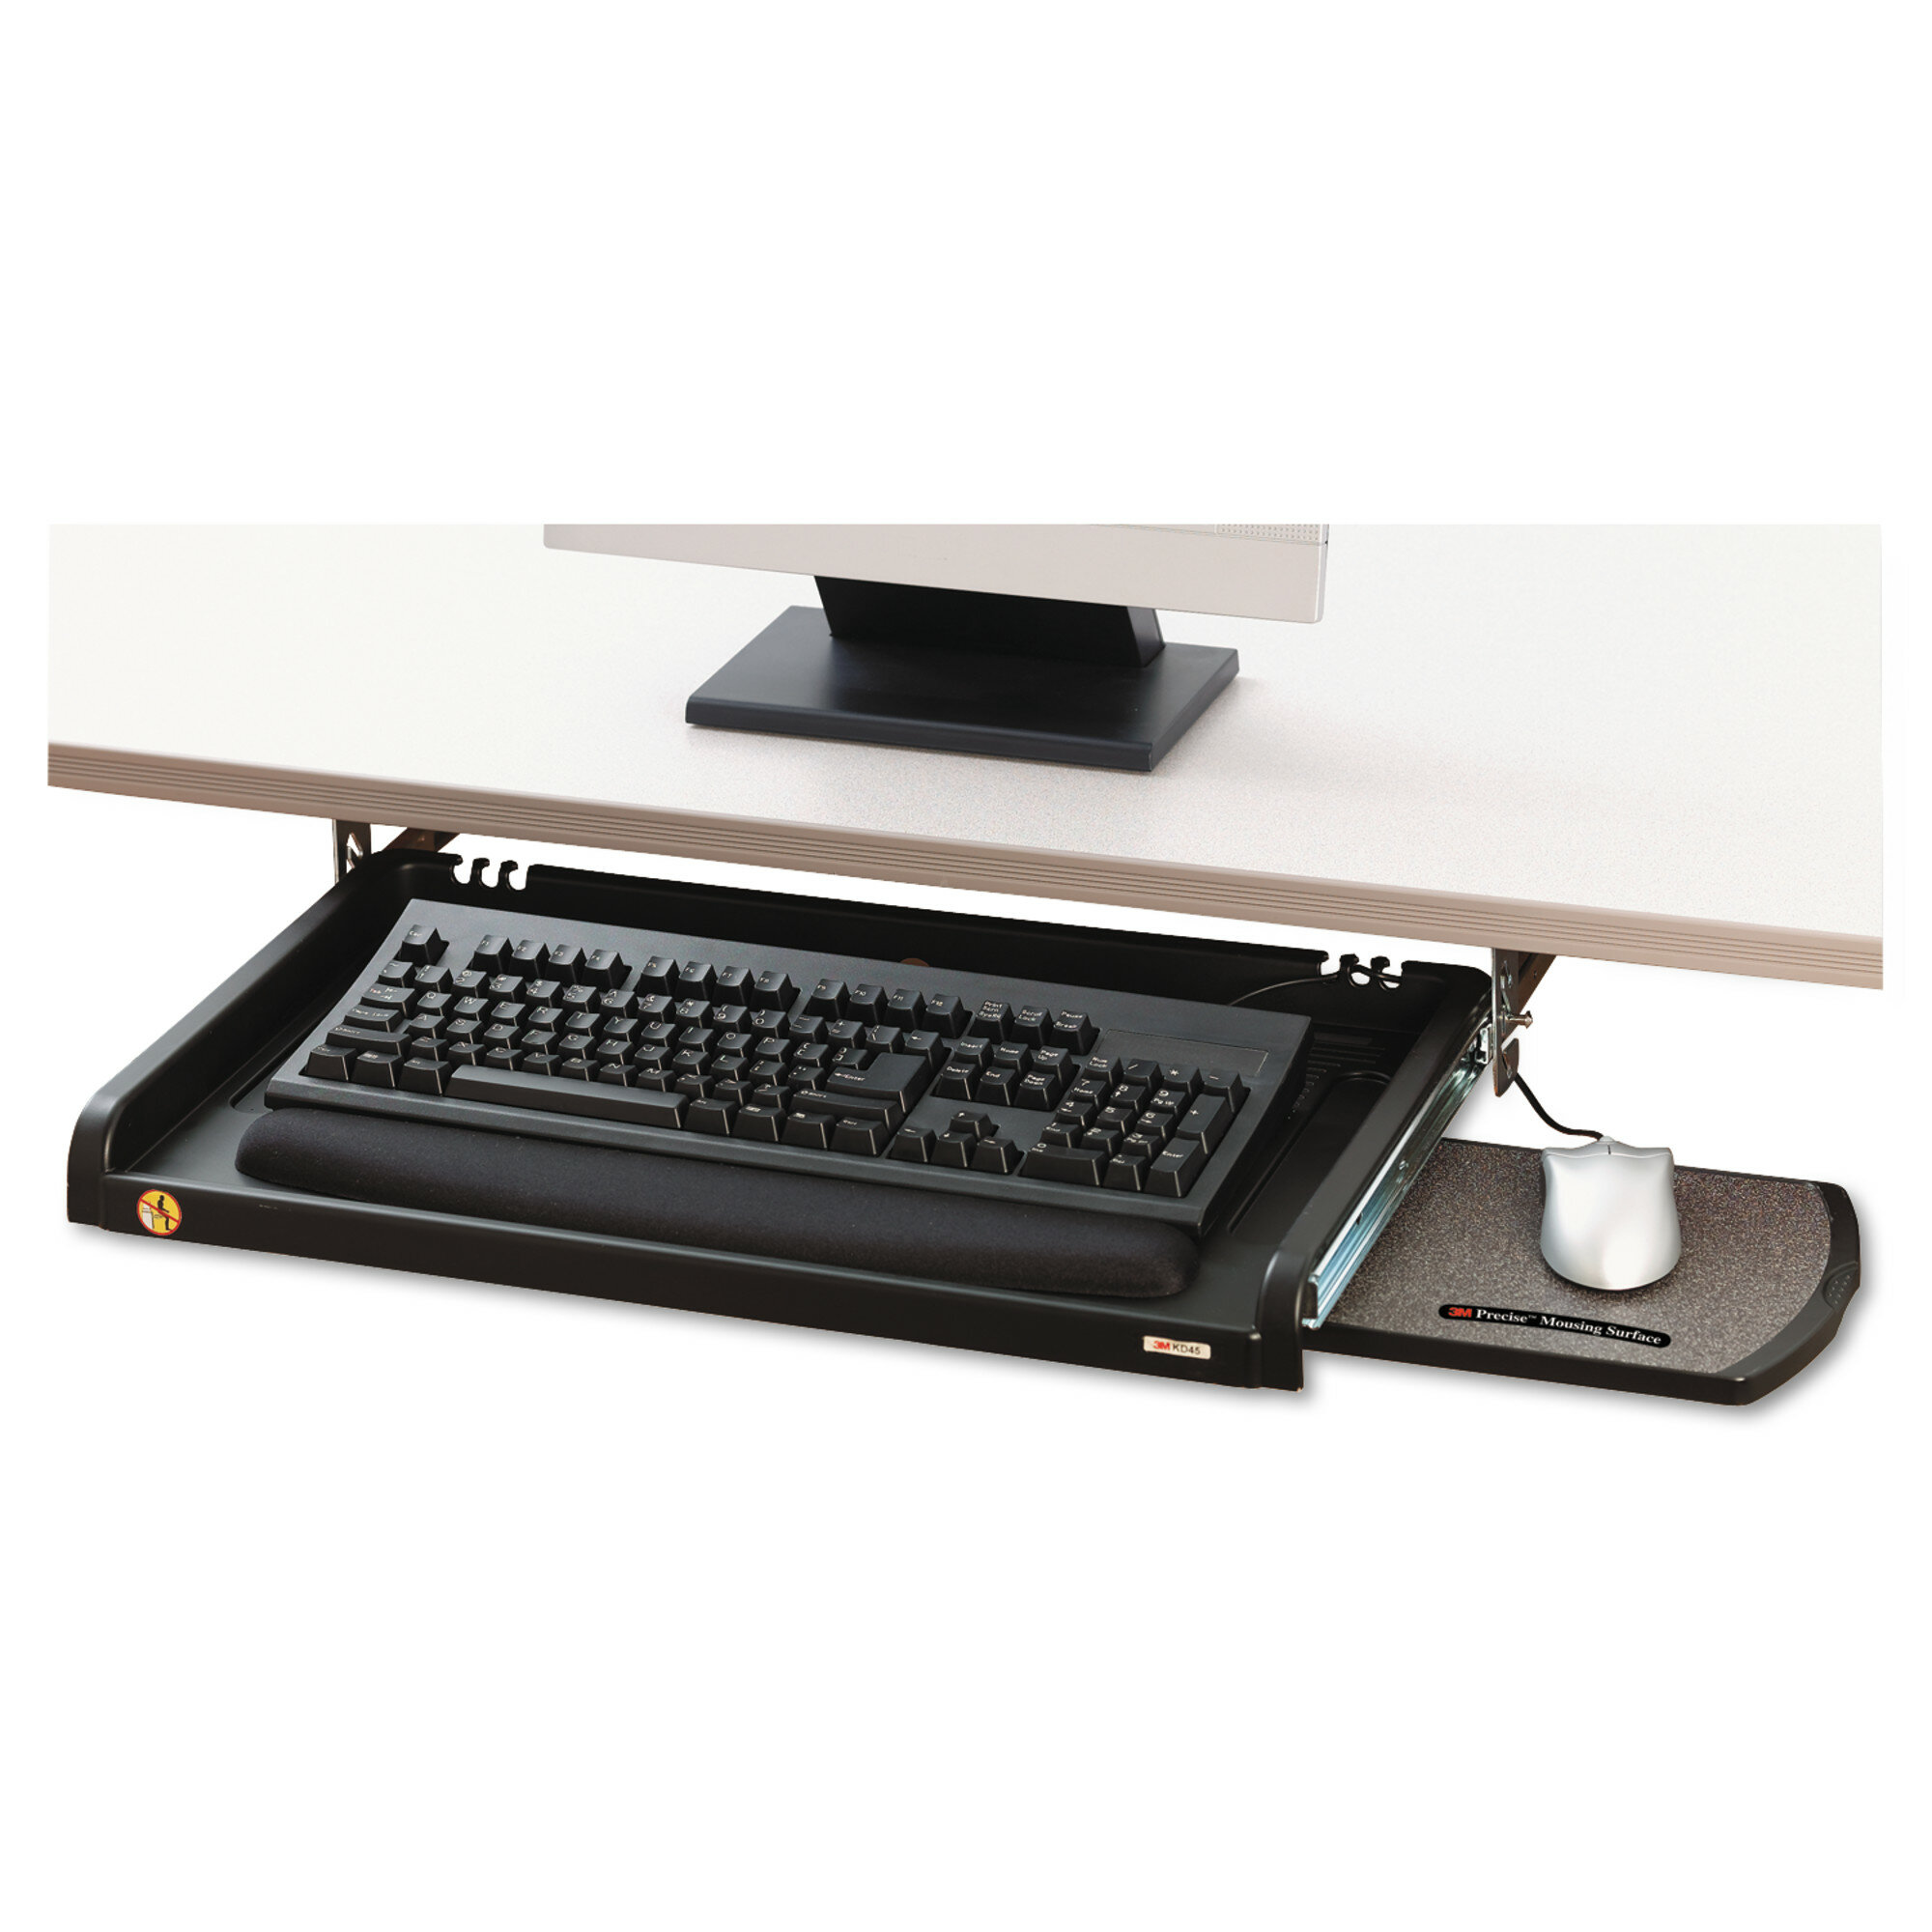 3m Adjustable Underdesk 26 4 H X 23 W Desk Keyboard Tray Wayfair